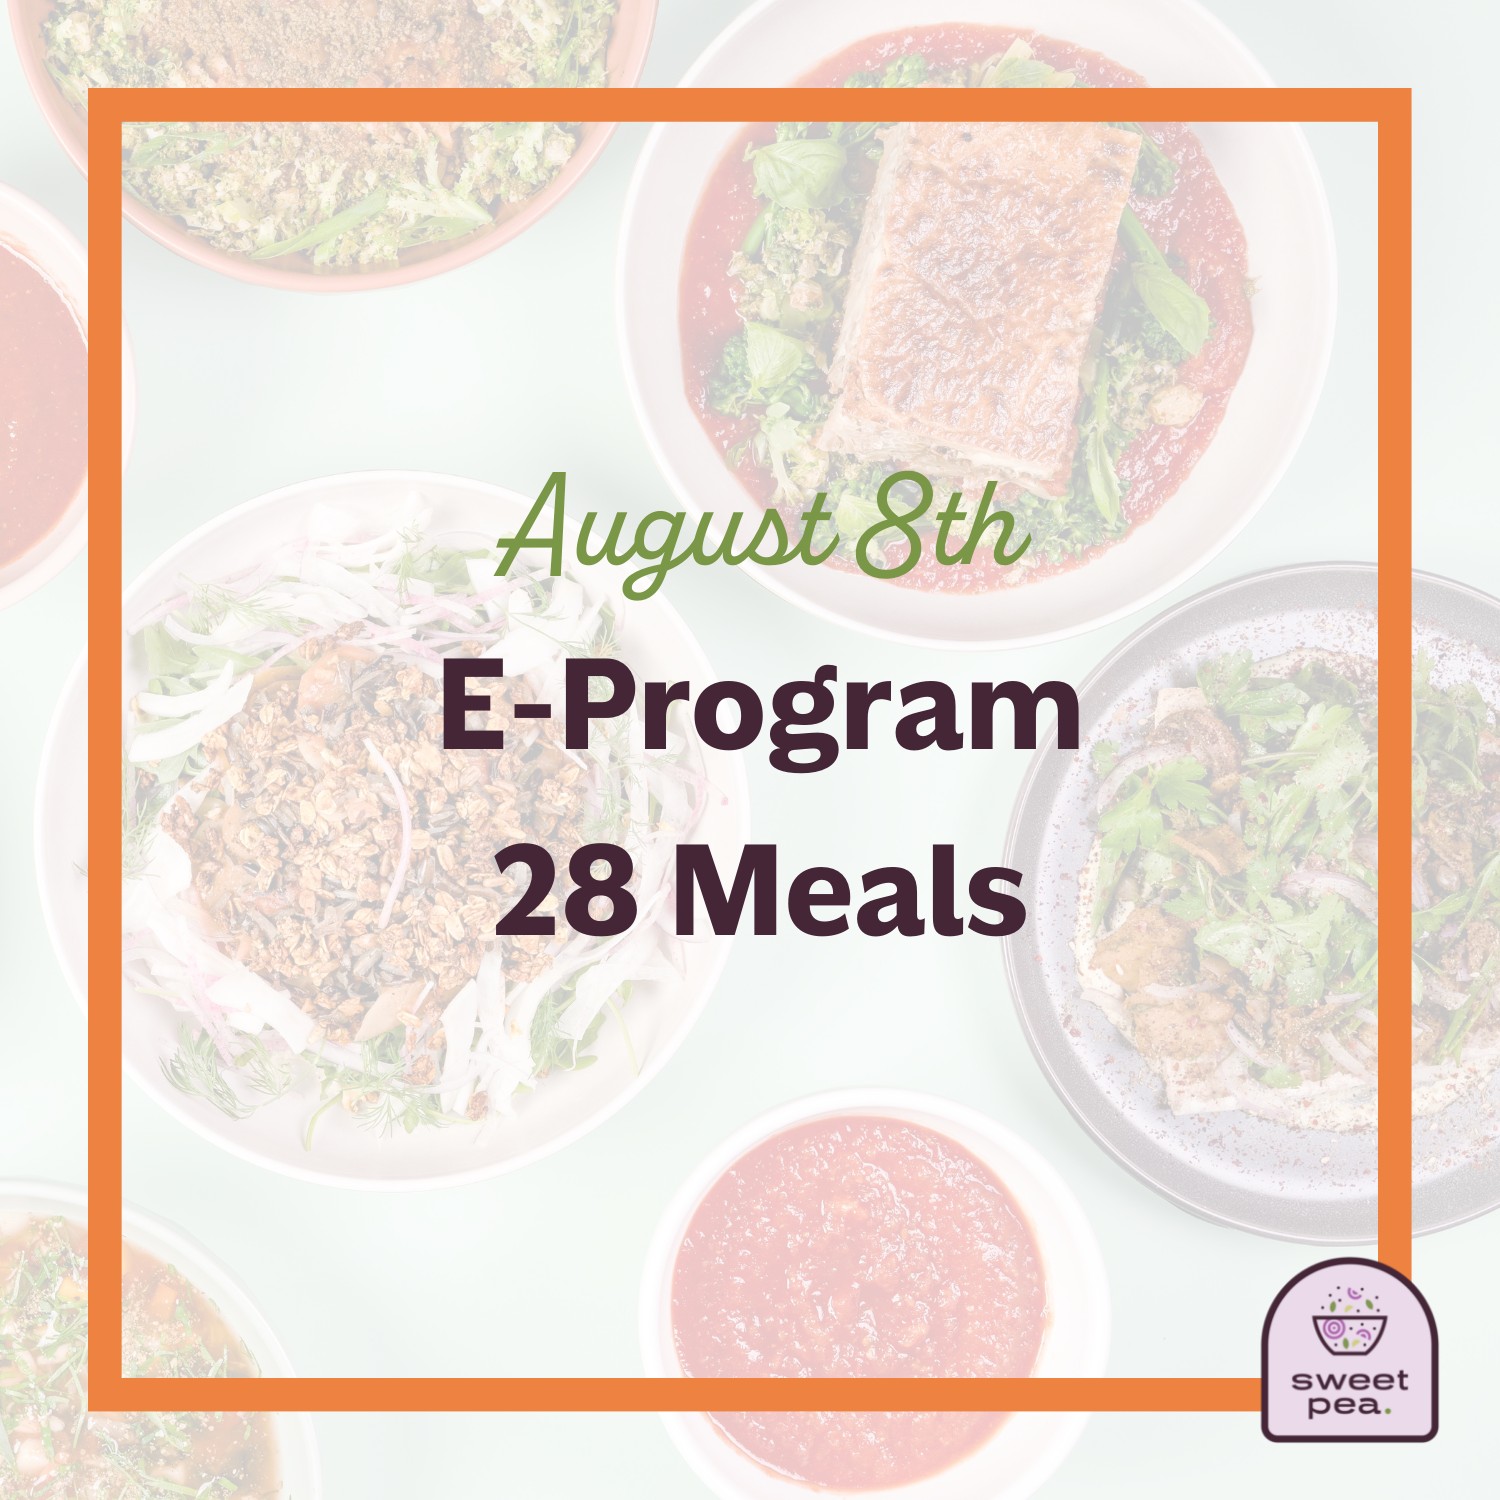 E-Program: 28 Meals (August)